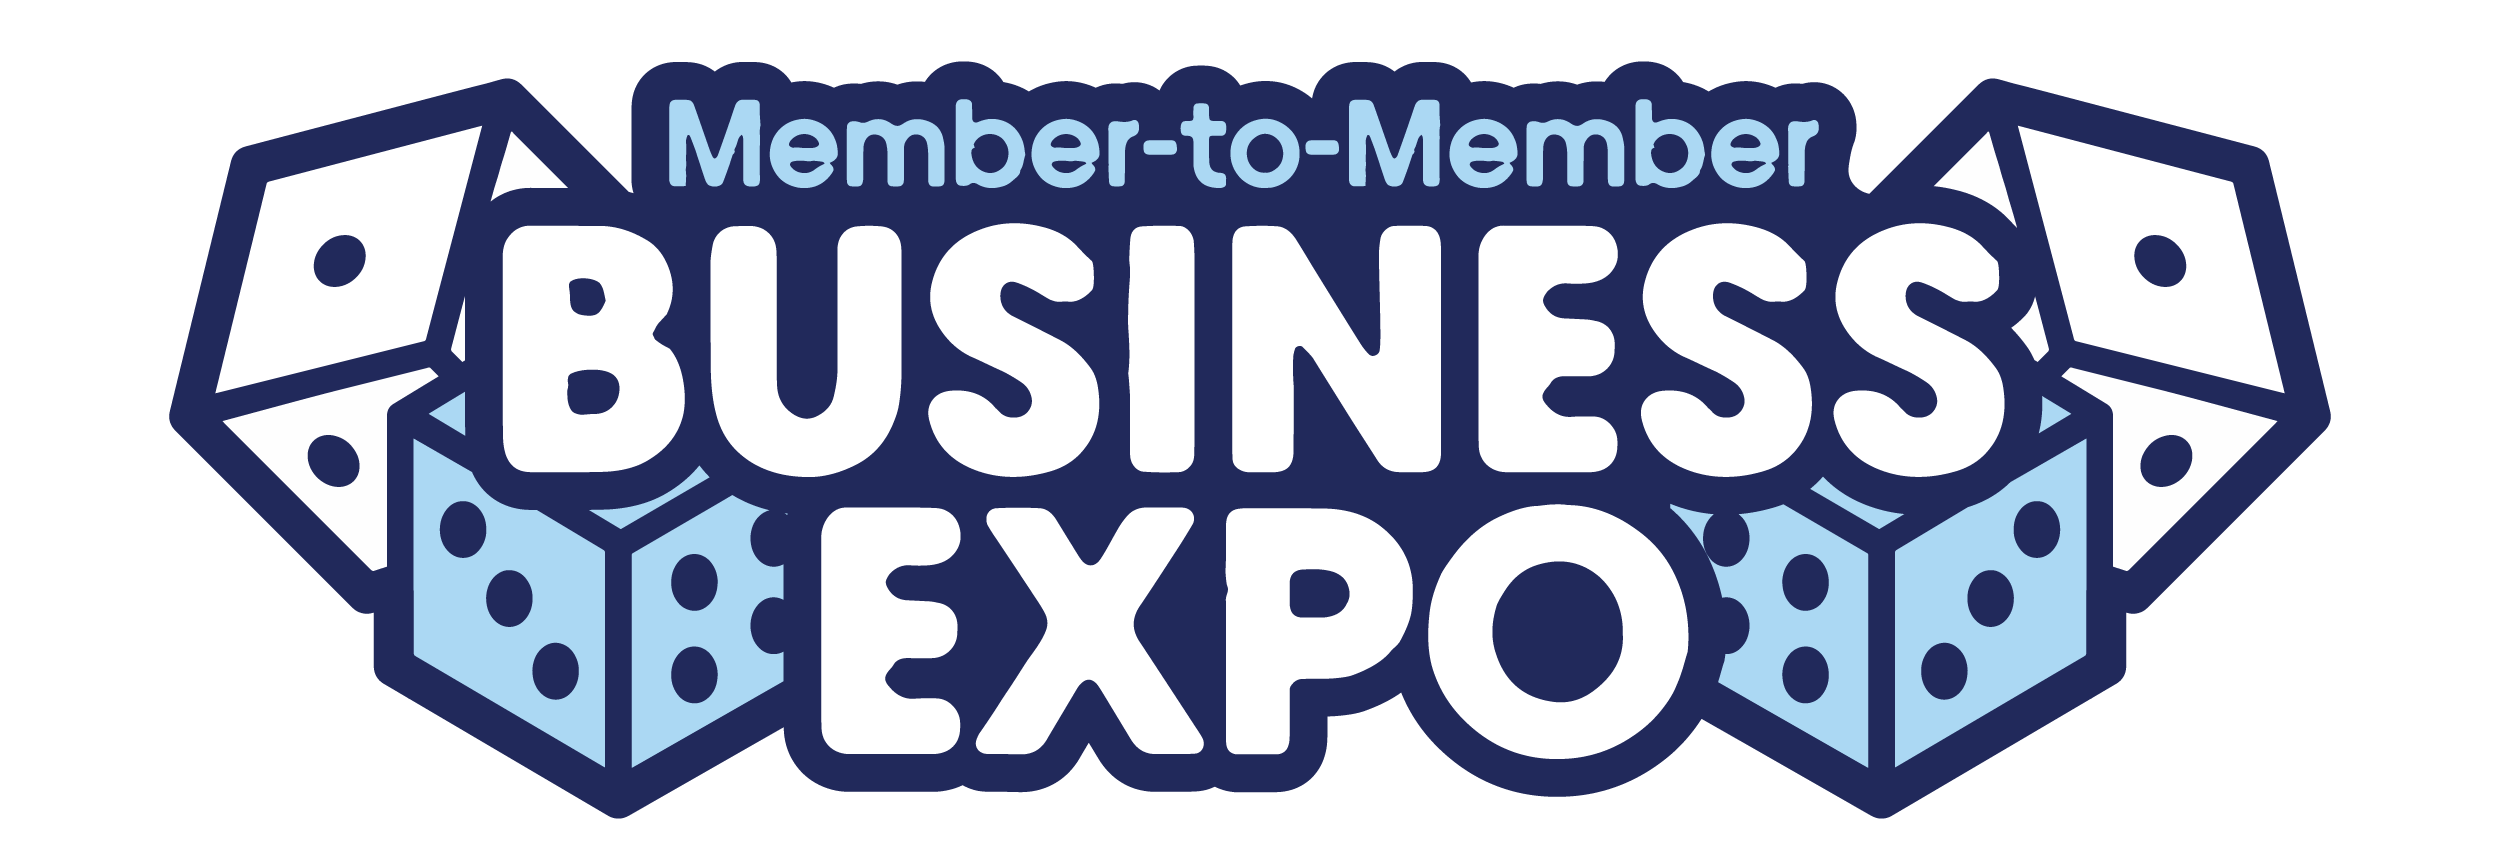 Member-to-Member Business Expo Logo